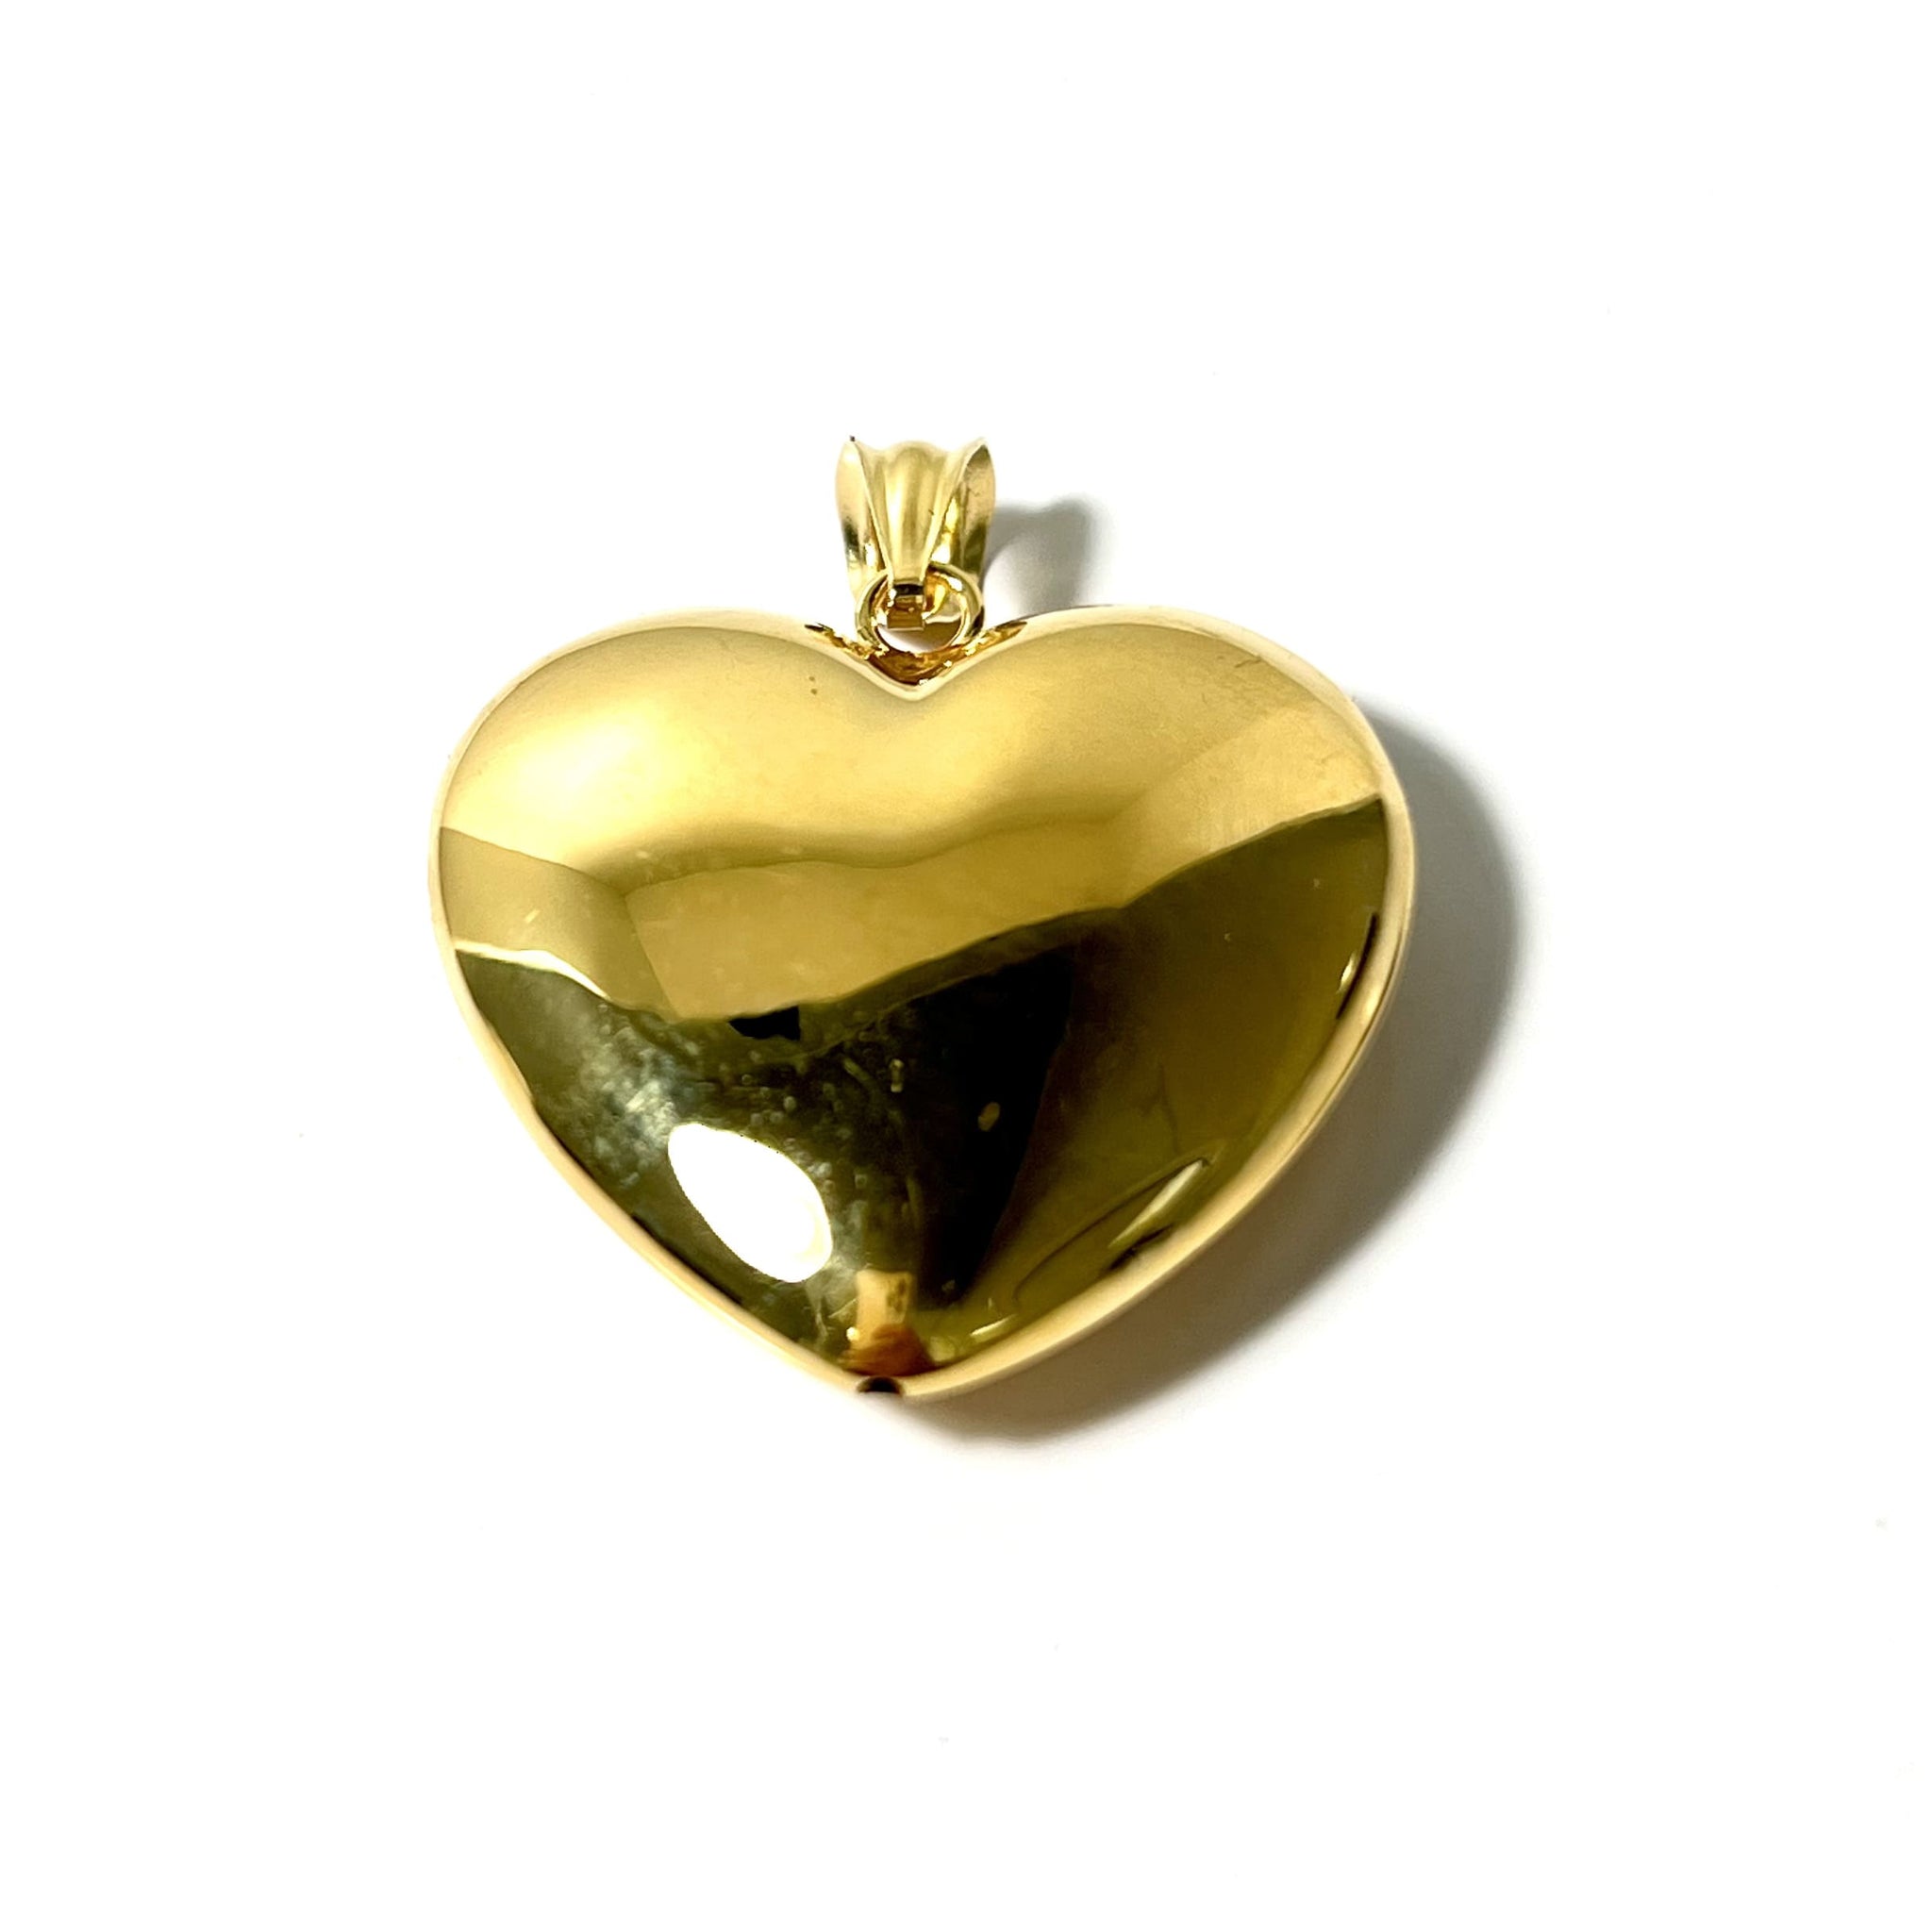 Heart Pendant - 18 Carat Gold - 3x3 cm - 367